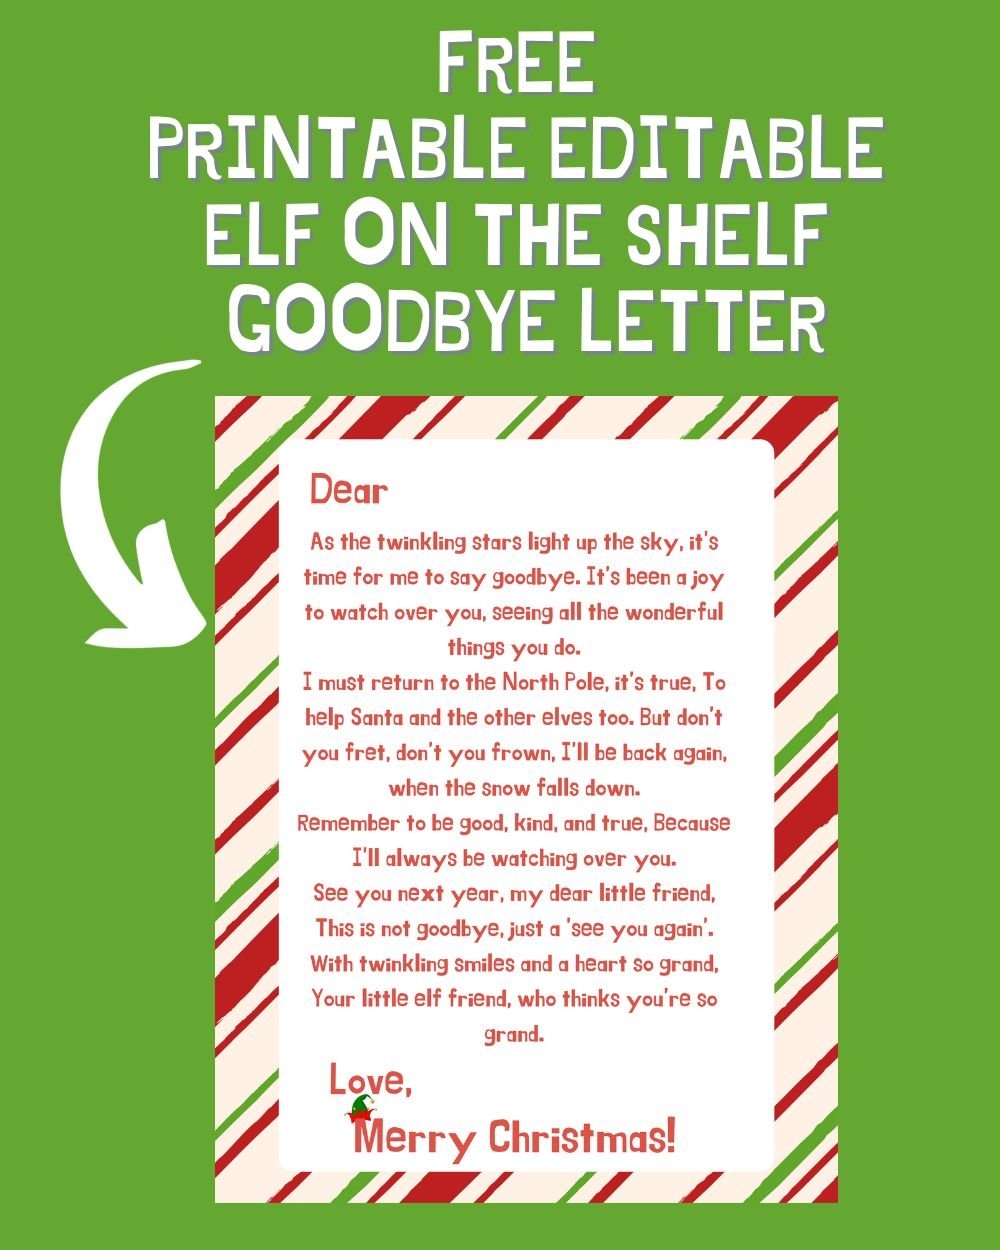 Free Printable Editable Elf On The Shelf Goodbye Letter A Sparkle Of Genius - Elf on The Shelf Goodbye Letter Free Printable